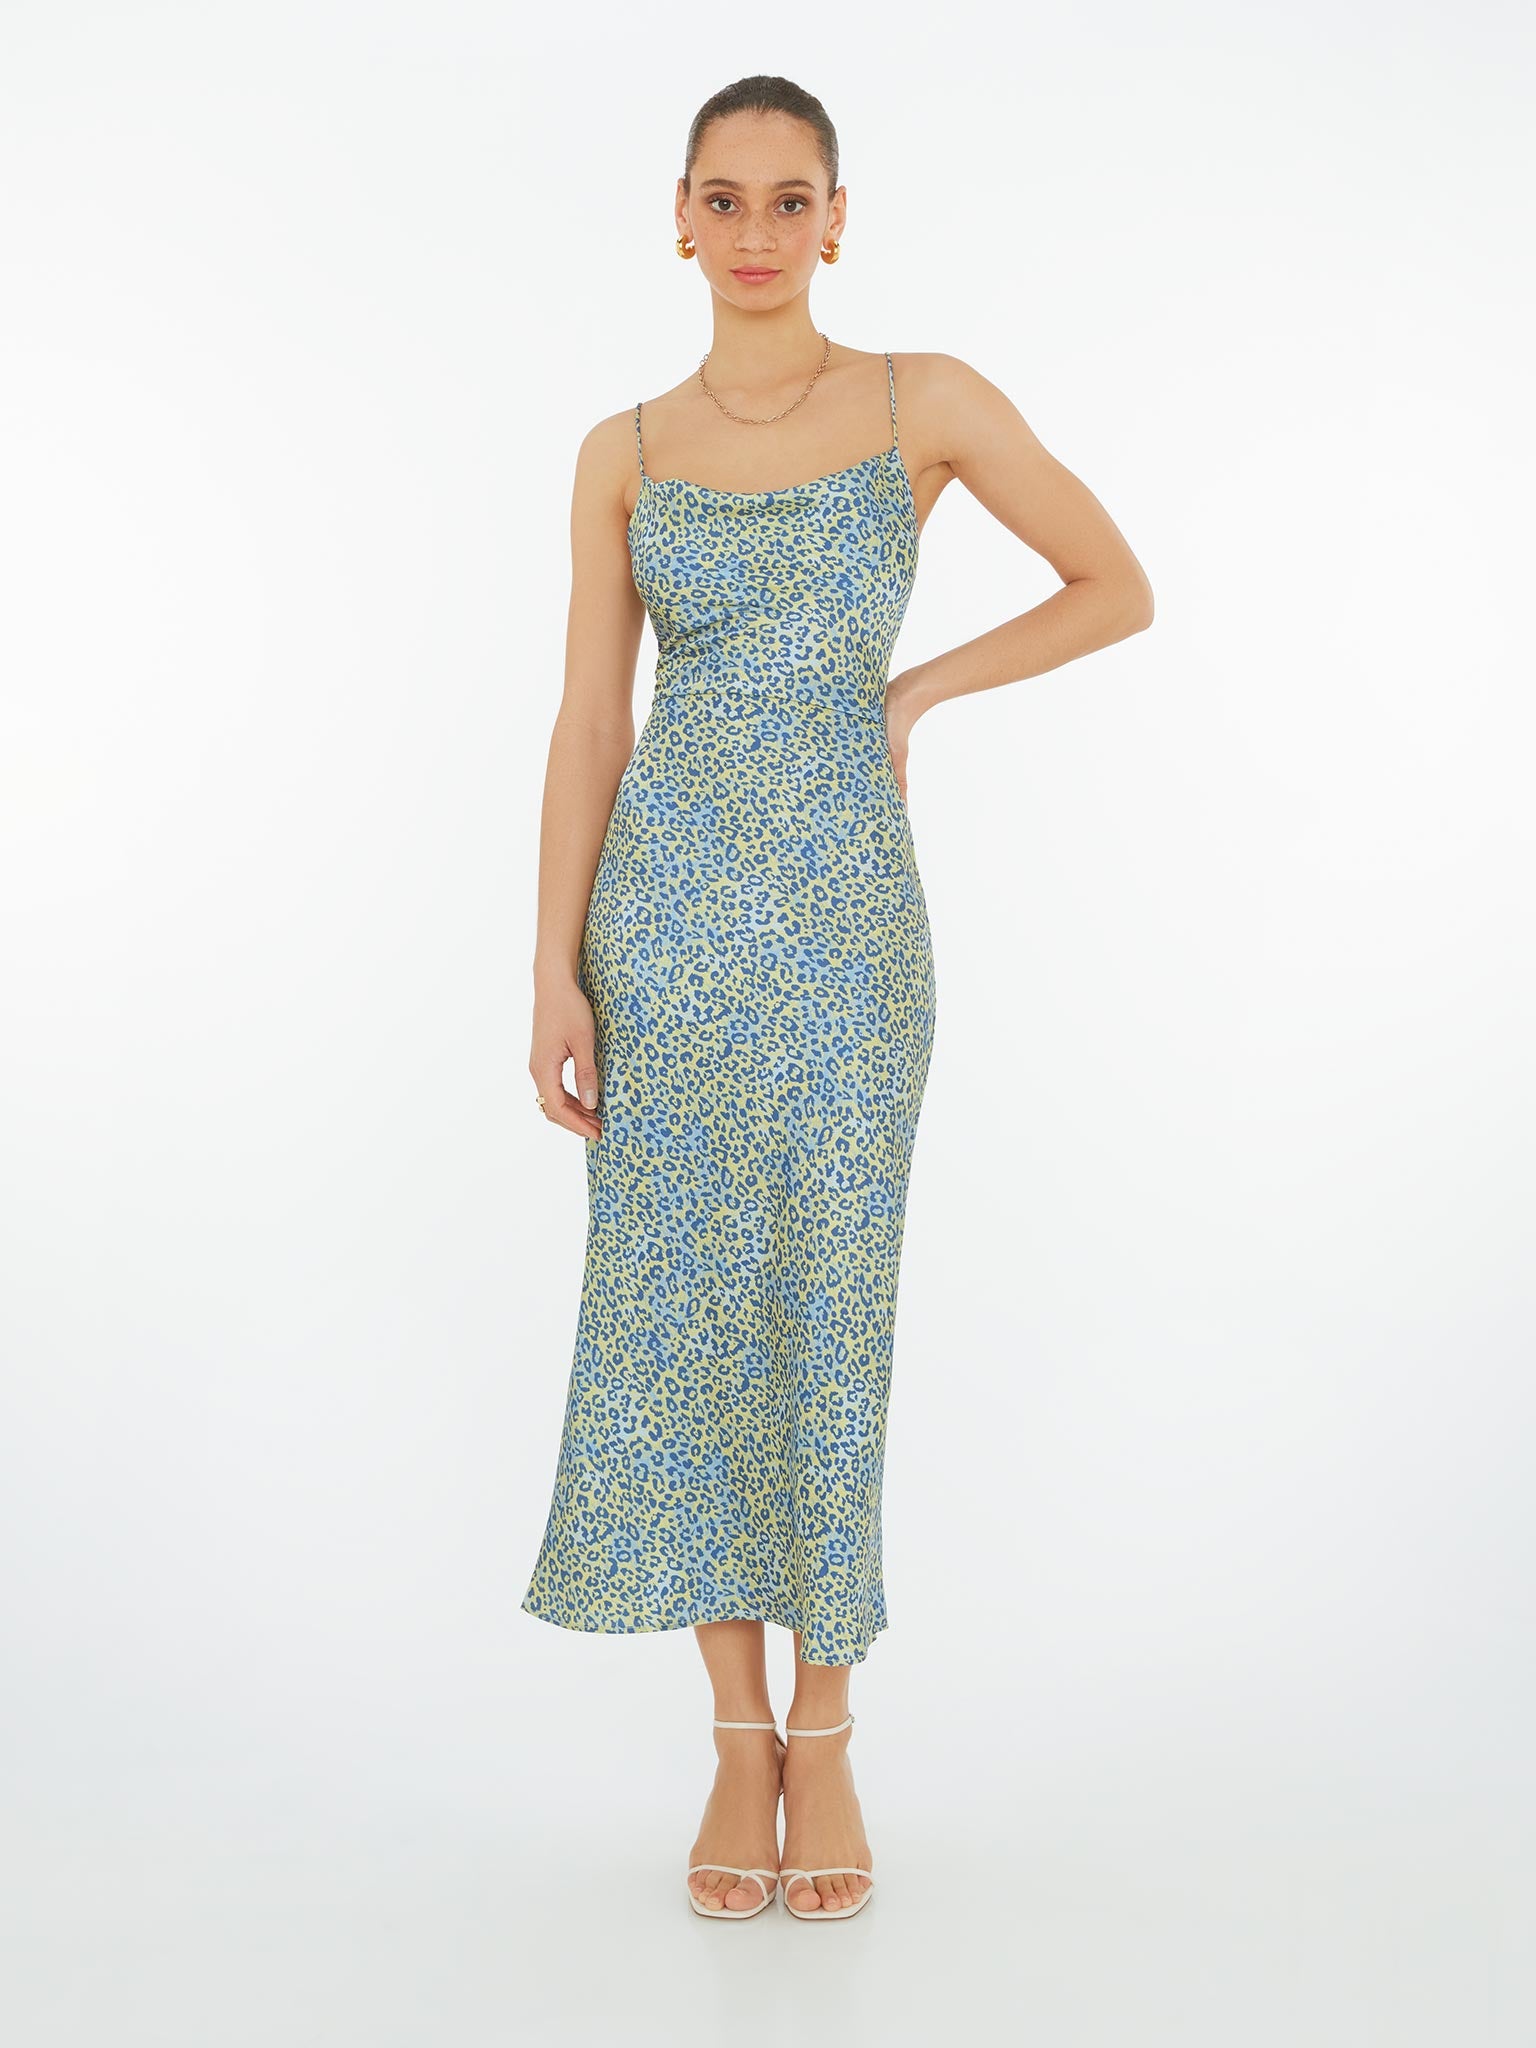 Riviera Midi Dress in Blue Leopard | OMNES | Dresses | Sustainable ...